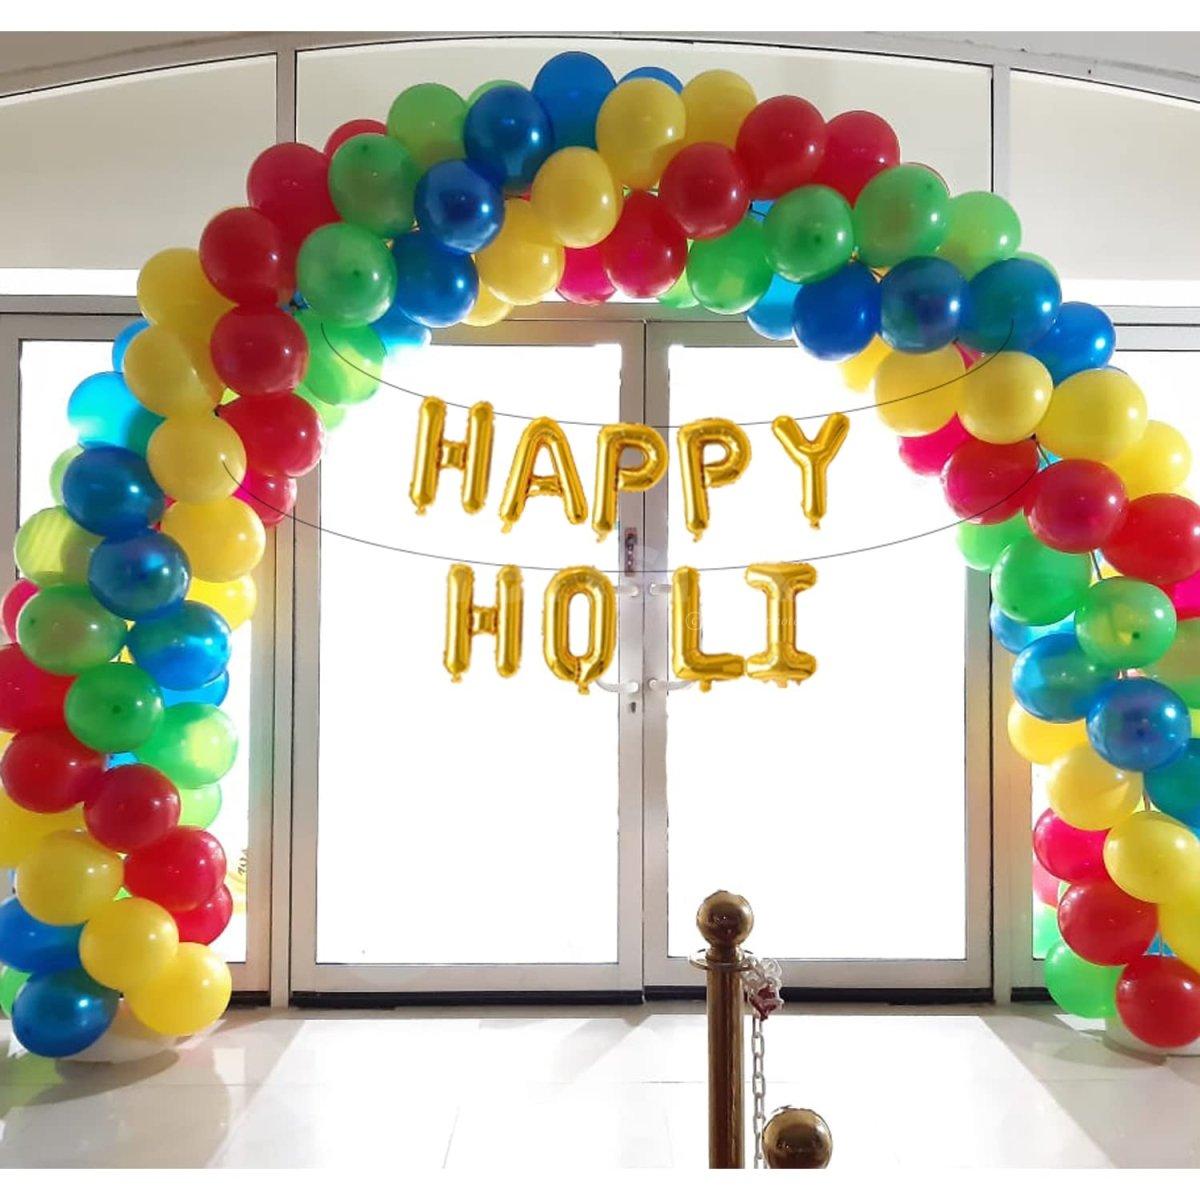 Holi Decoration Idea for Your Holi Party in Delhi NCR | Delhi NCR